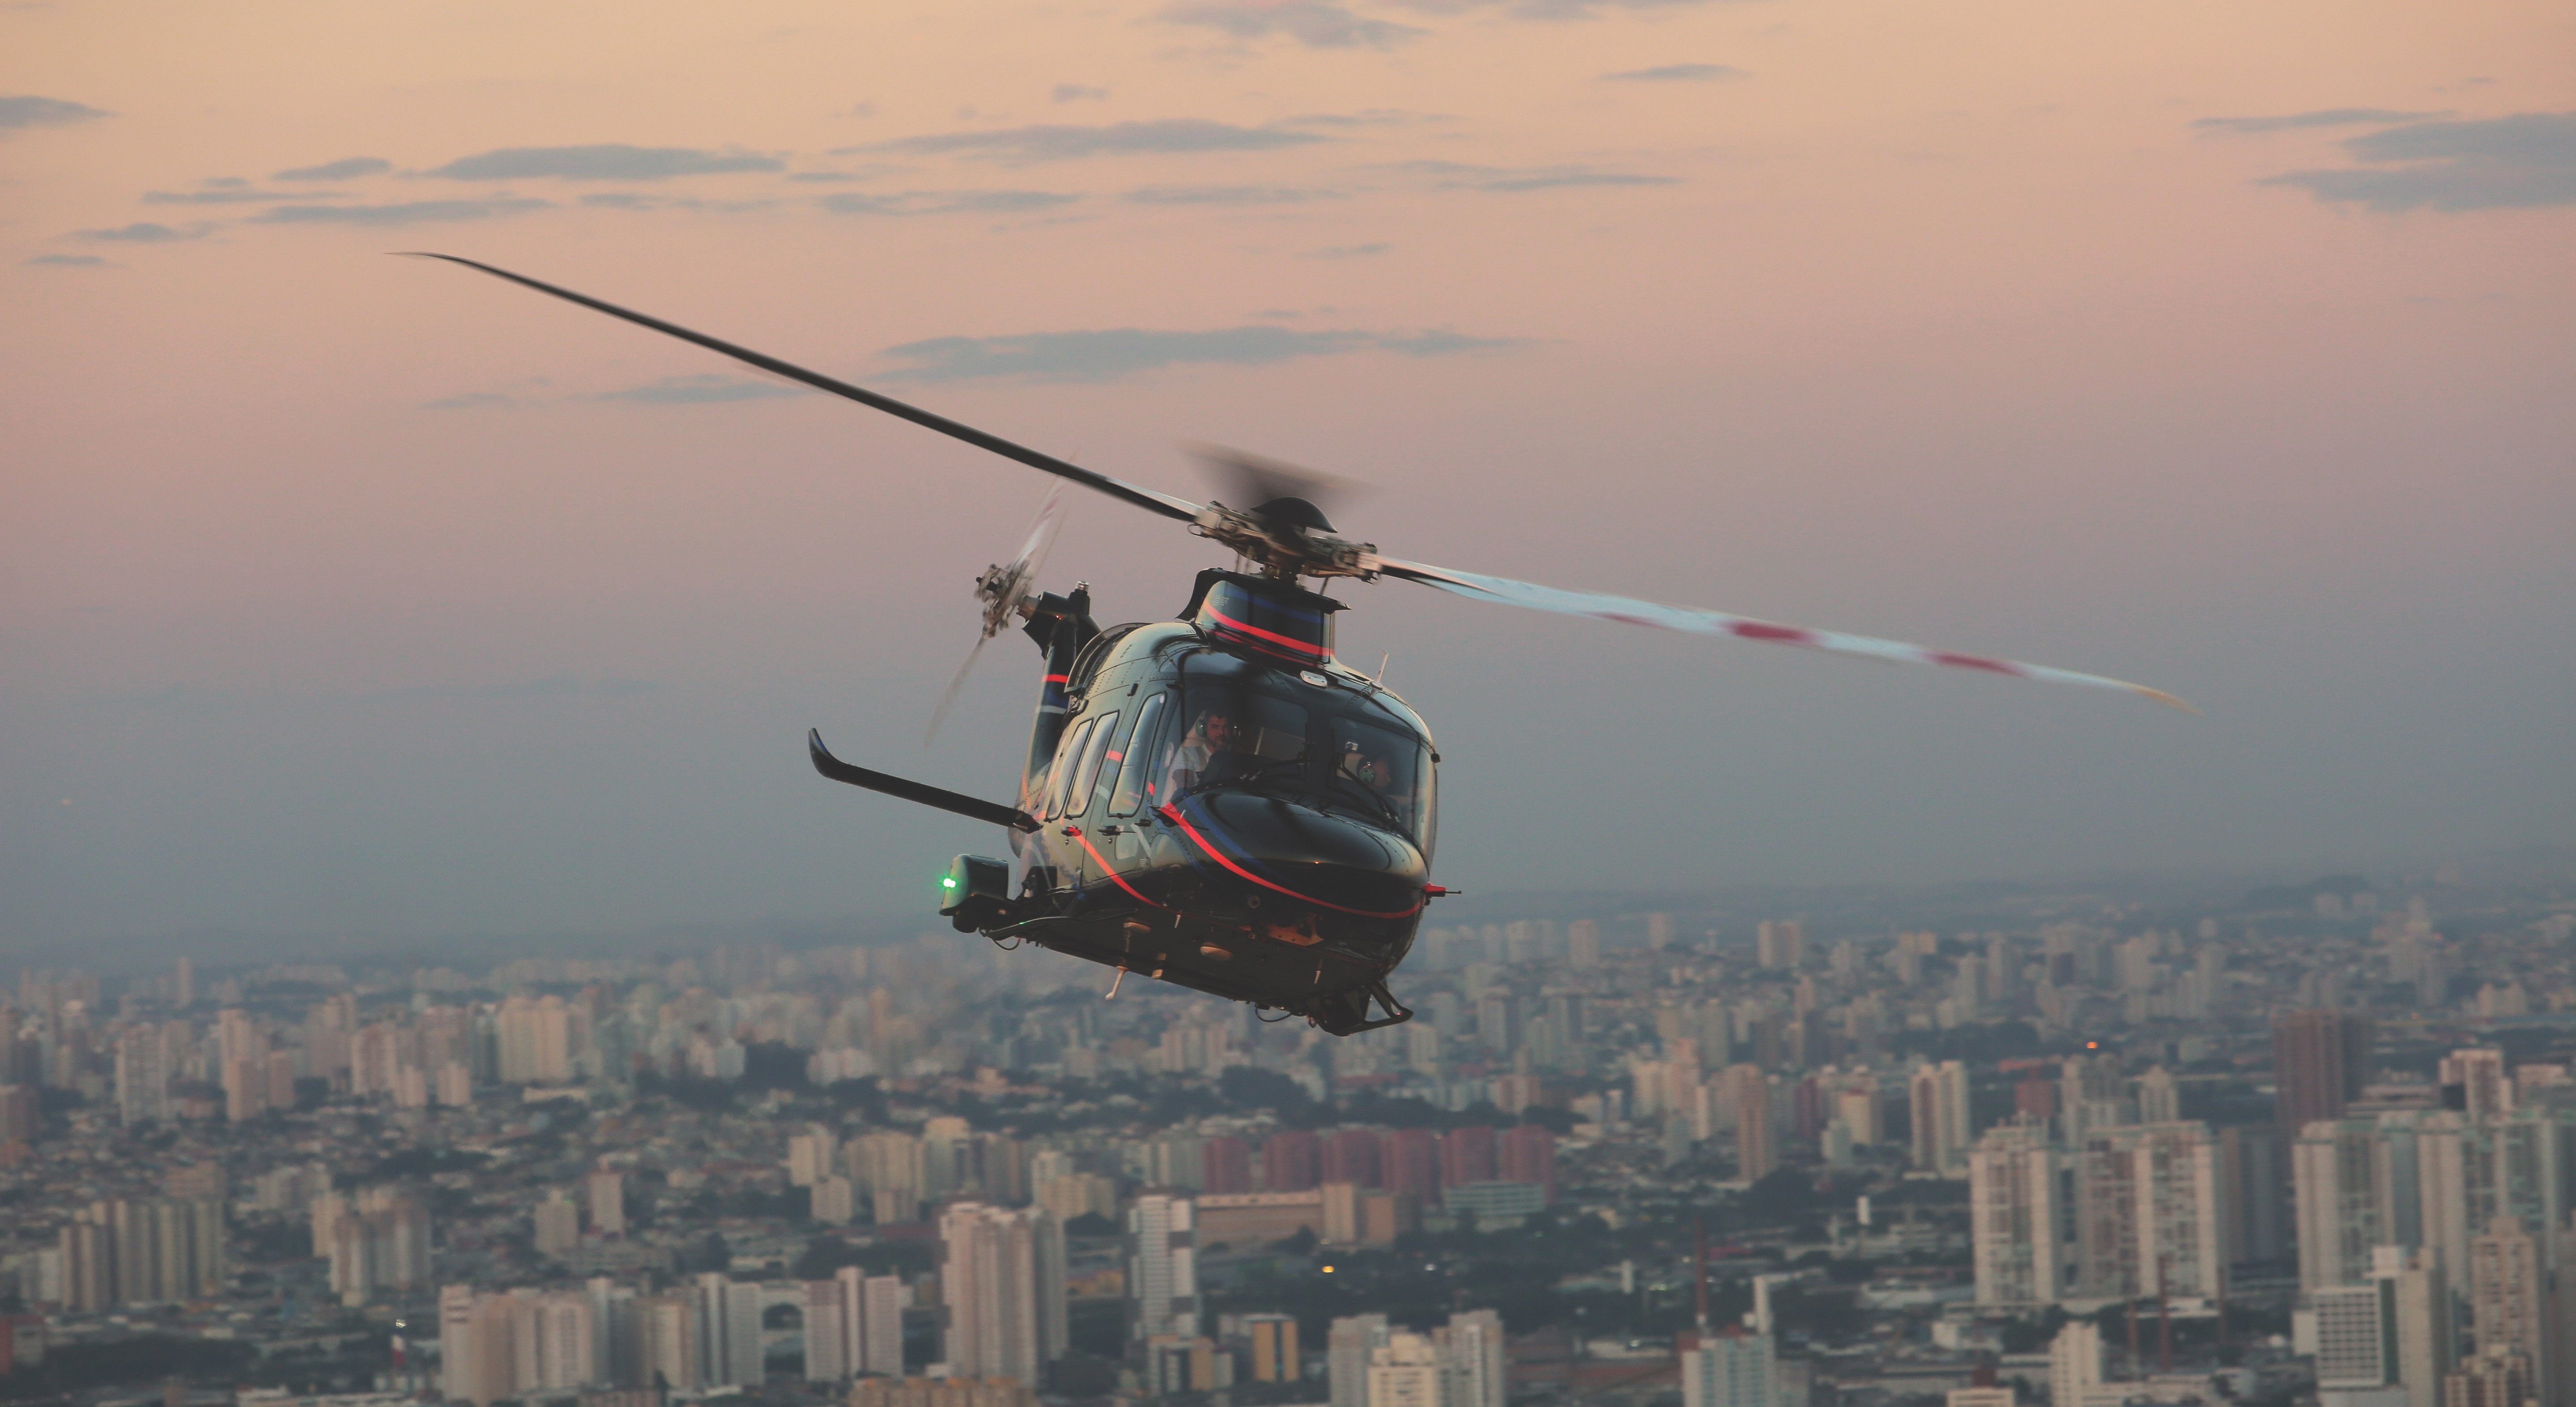 LABACE 2022: new Agusta vip brand services have Latin America premiere